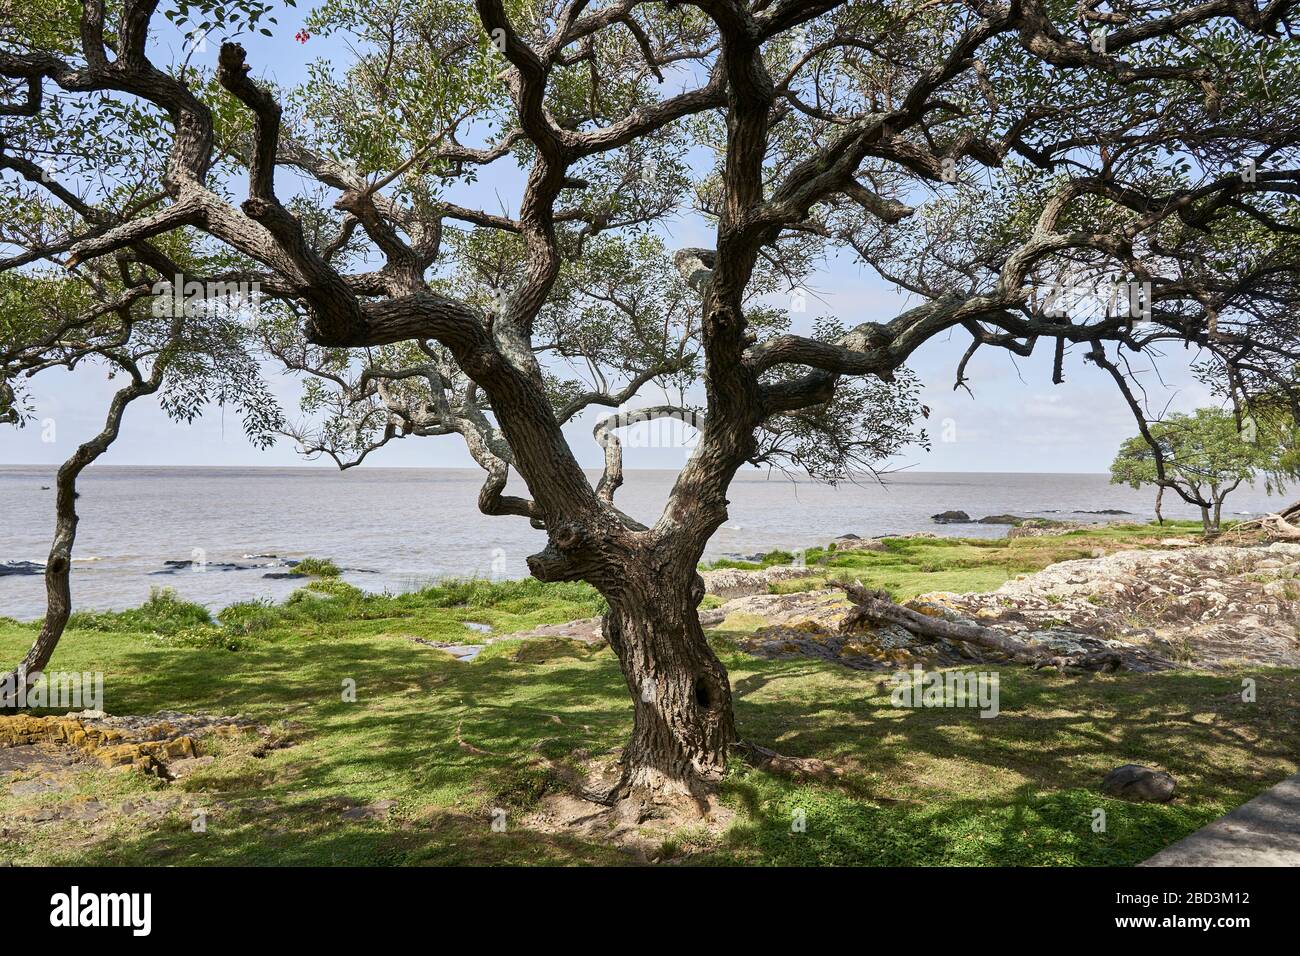 Knorriger Baum am Ufer in Colonia del Sacramento, Uruguay. Stockfoto